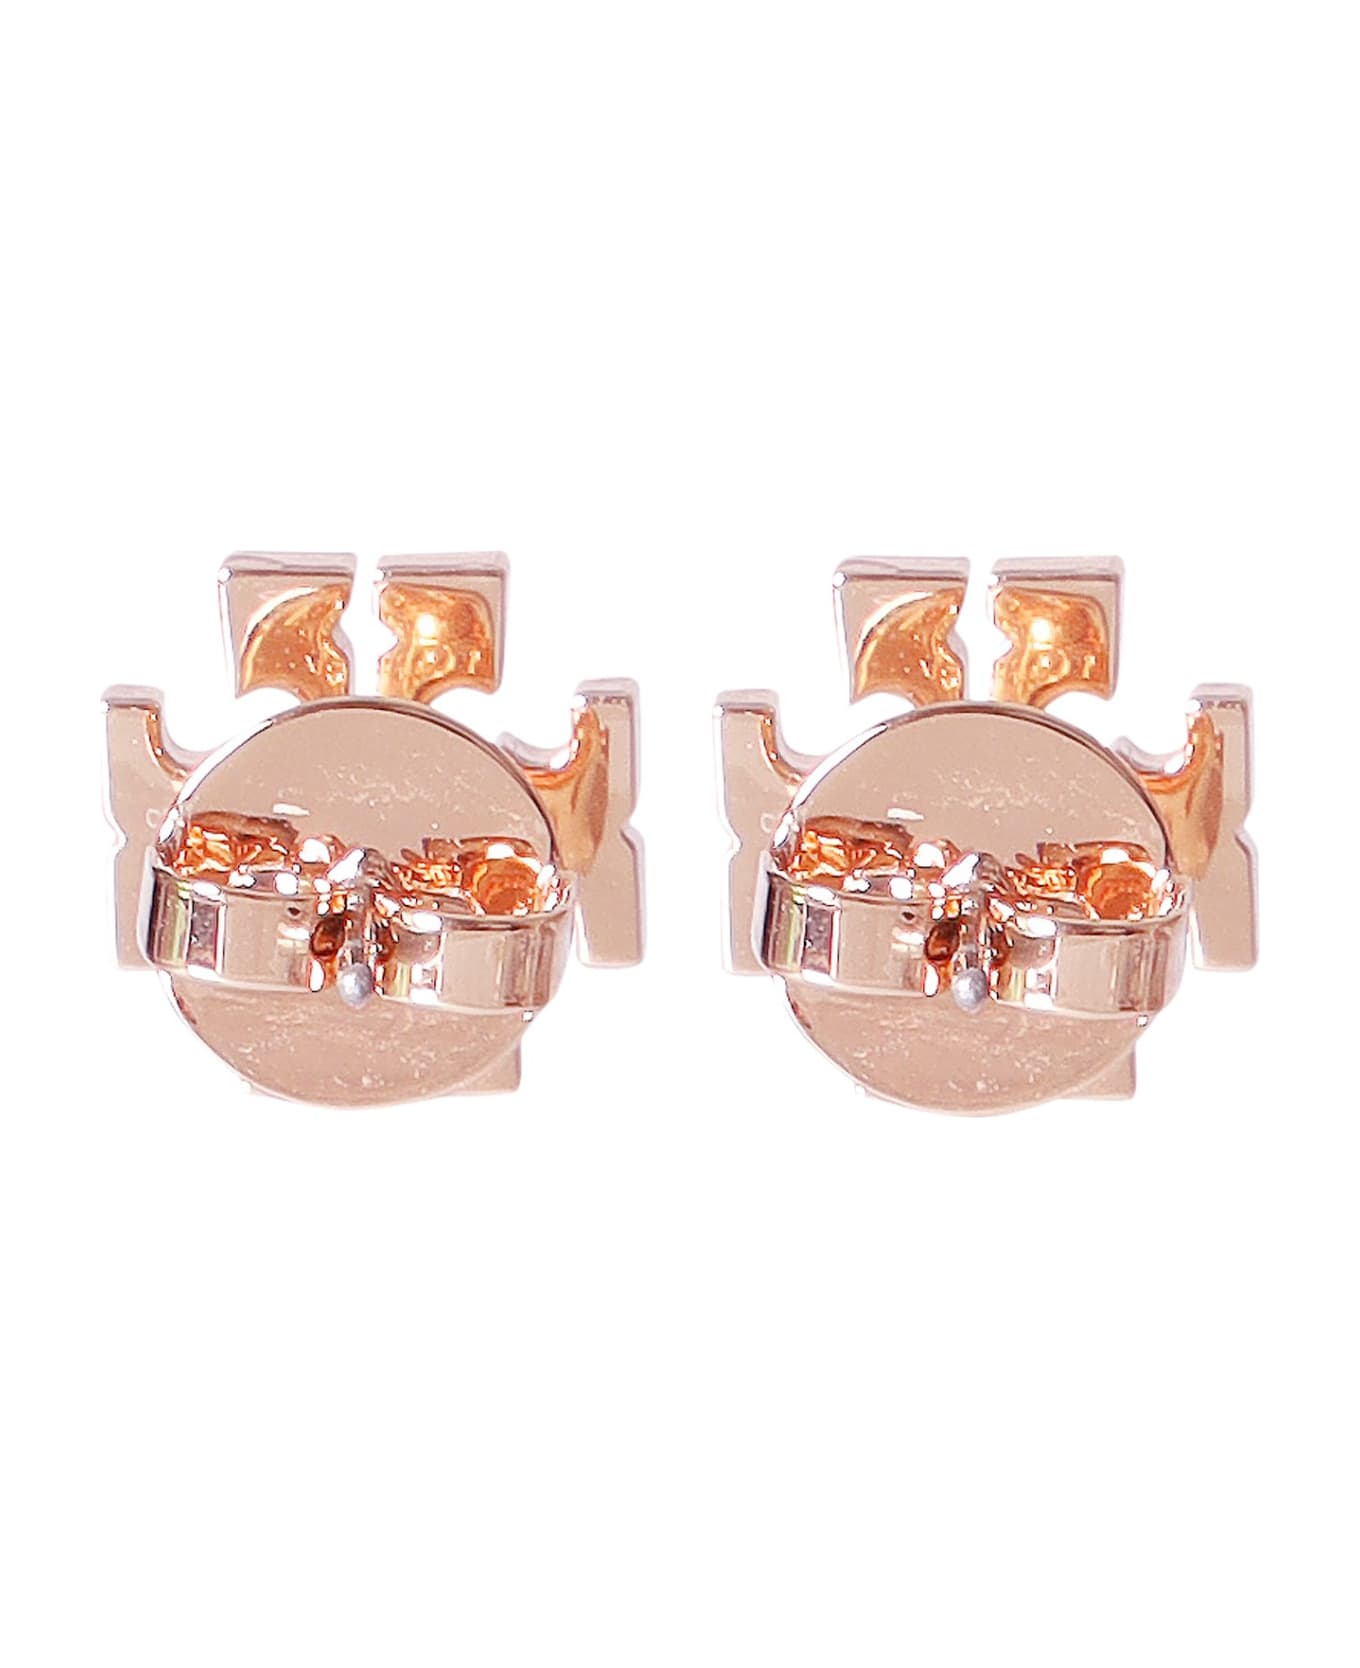 Tory Burch Crystal Logo Earrings - Rose gold/crystal